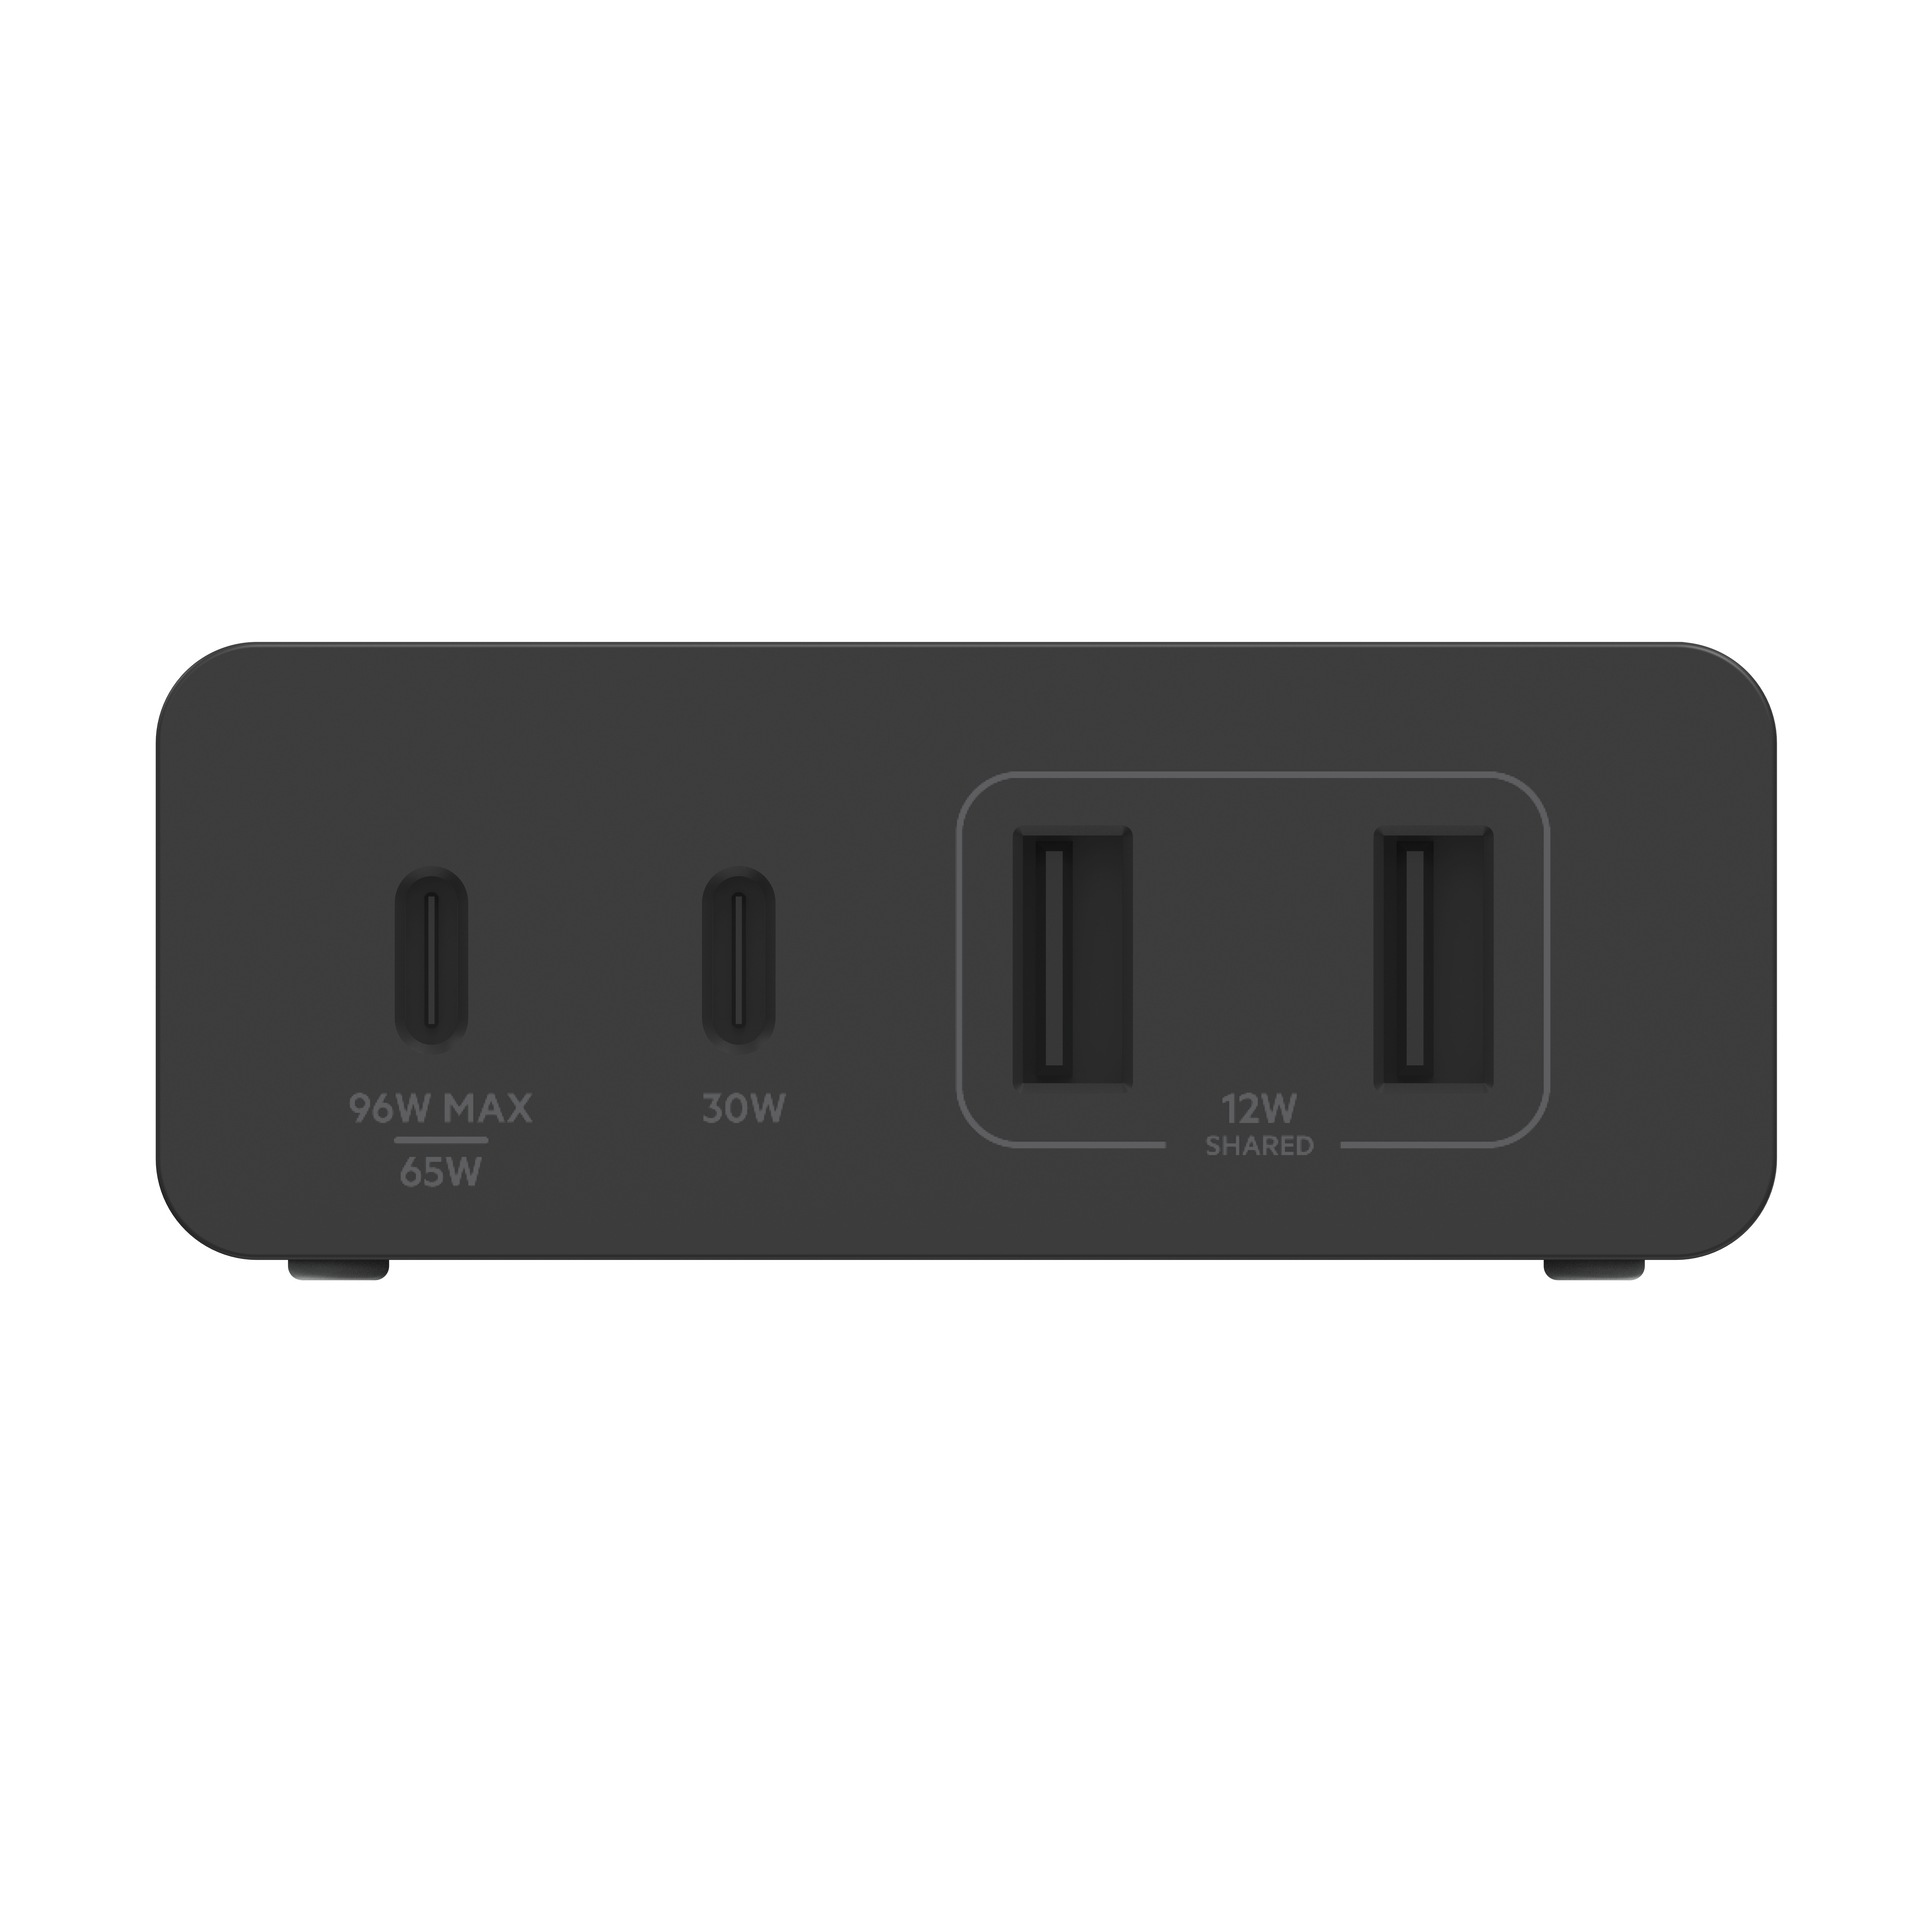 Belkin USB-Ladegerät »BoostCharge Pro 108 Watt 4-Port GaN Ladegerät/Charger«, mit 2x USB-C und 2x USB-A (Netzteil für Laptops, Tablets, Smartphones)